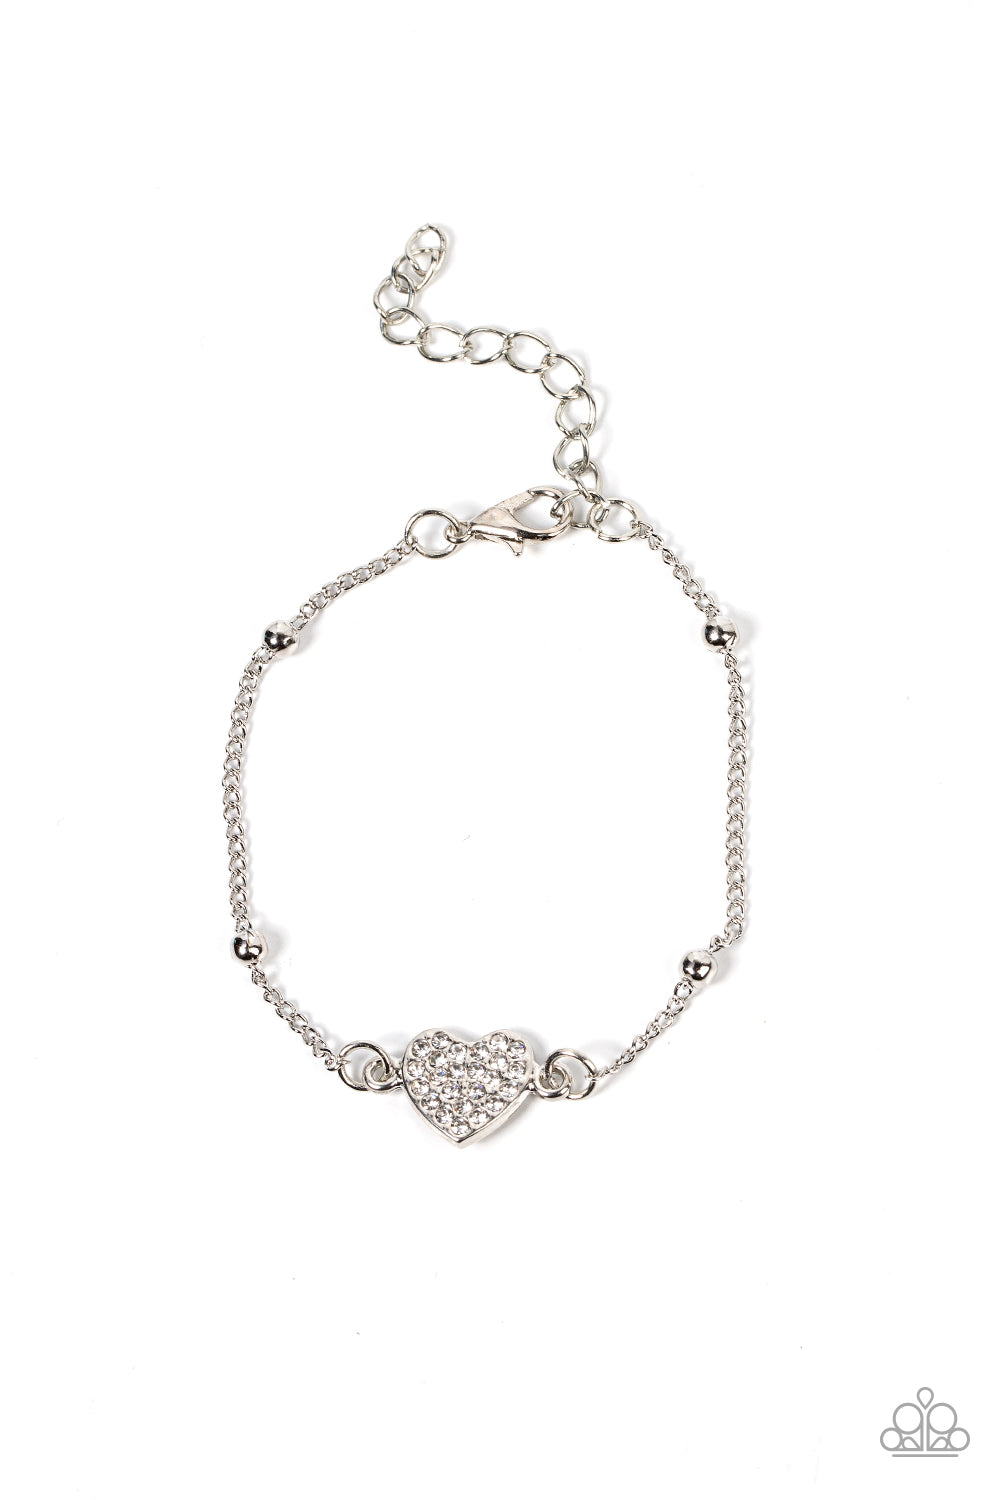 Heartachingly Adorable - White Rhinestone (Silver Heart) Bracelet freeshipping - JewLz4u Gemstone Gallery